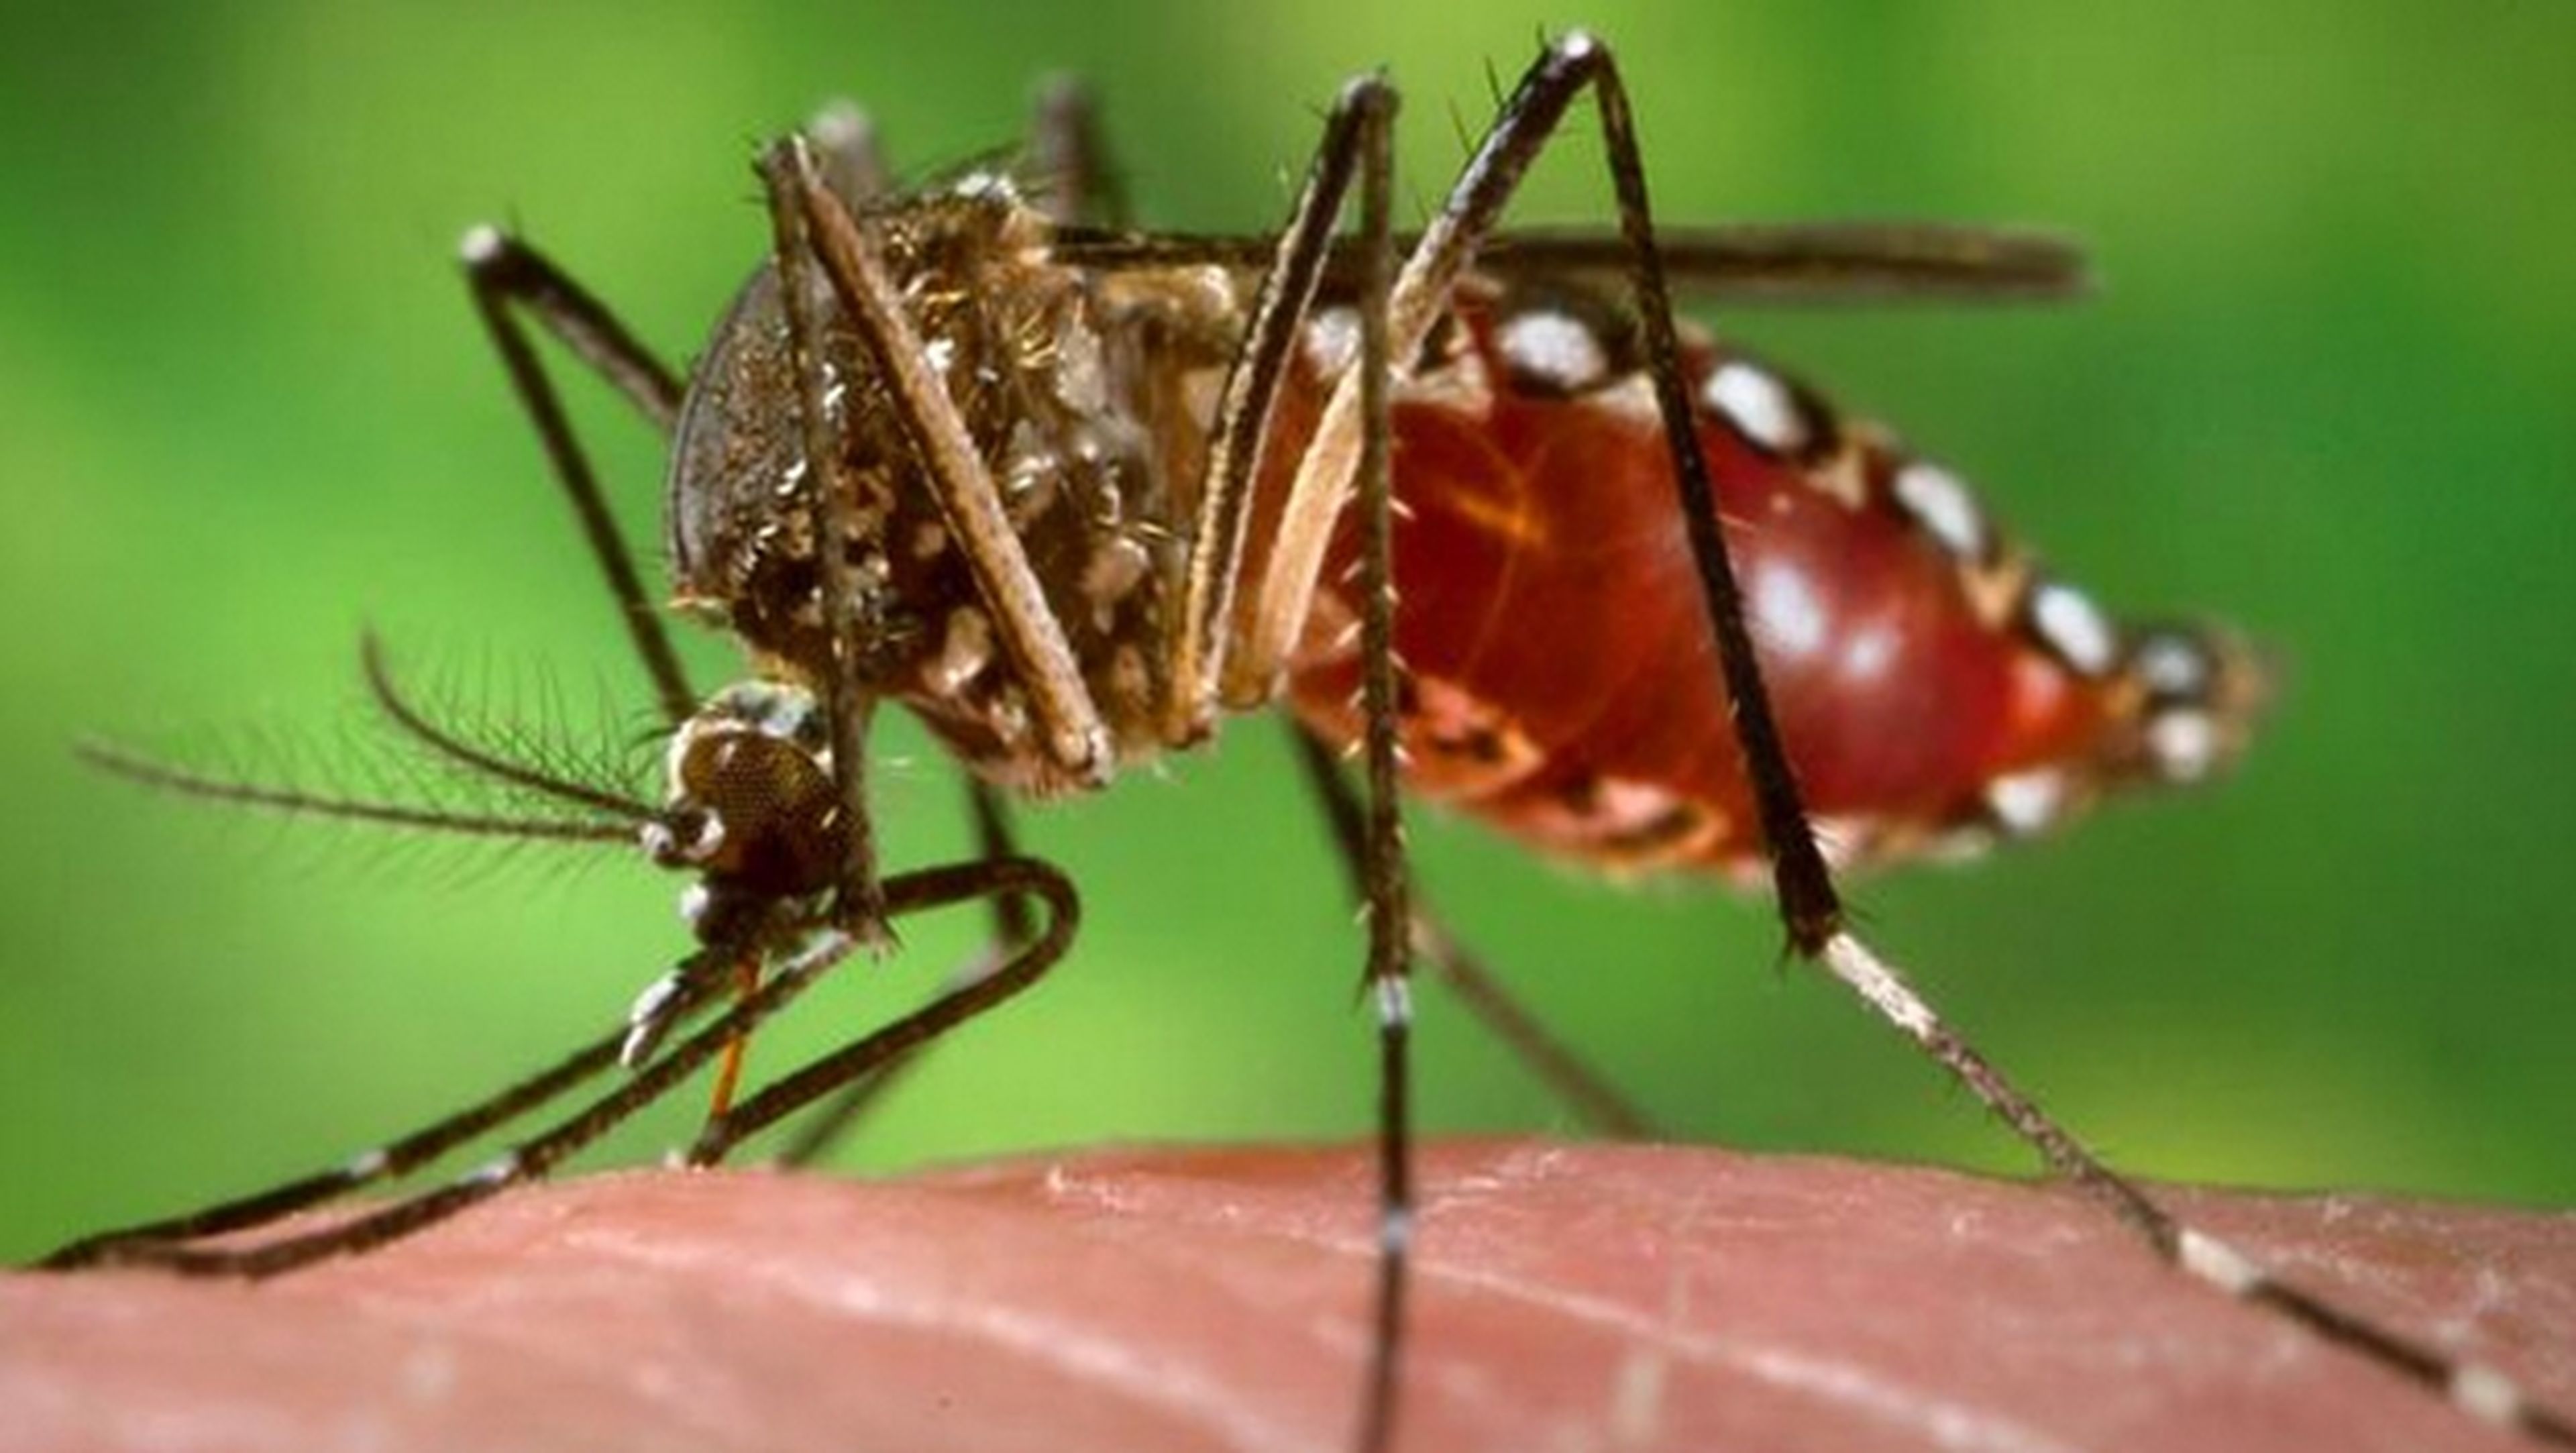 Google va a soltar 20 millones de mosquitos infectados con una bacteria